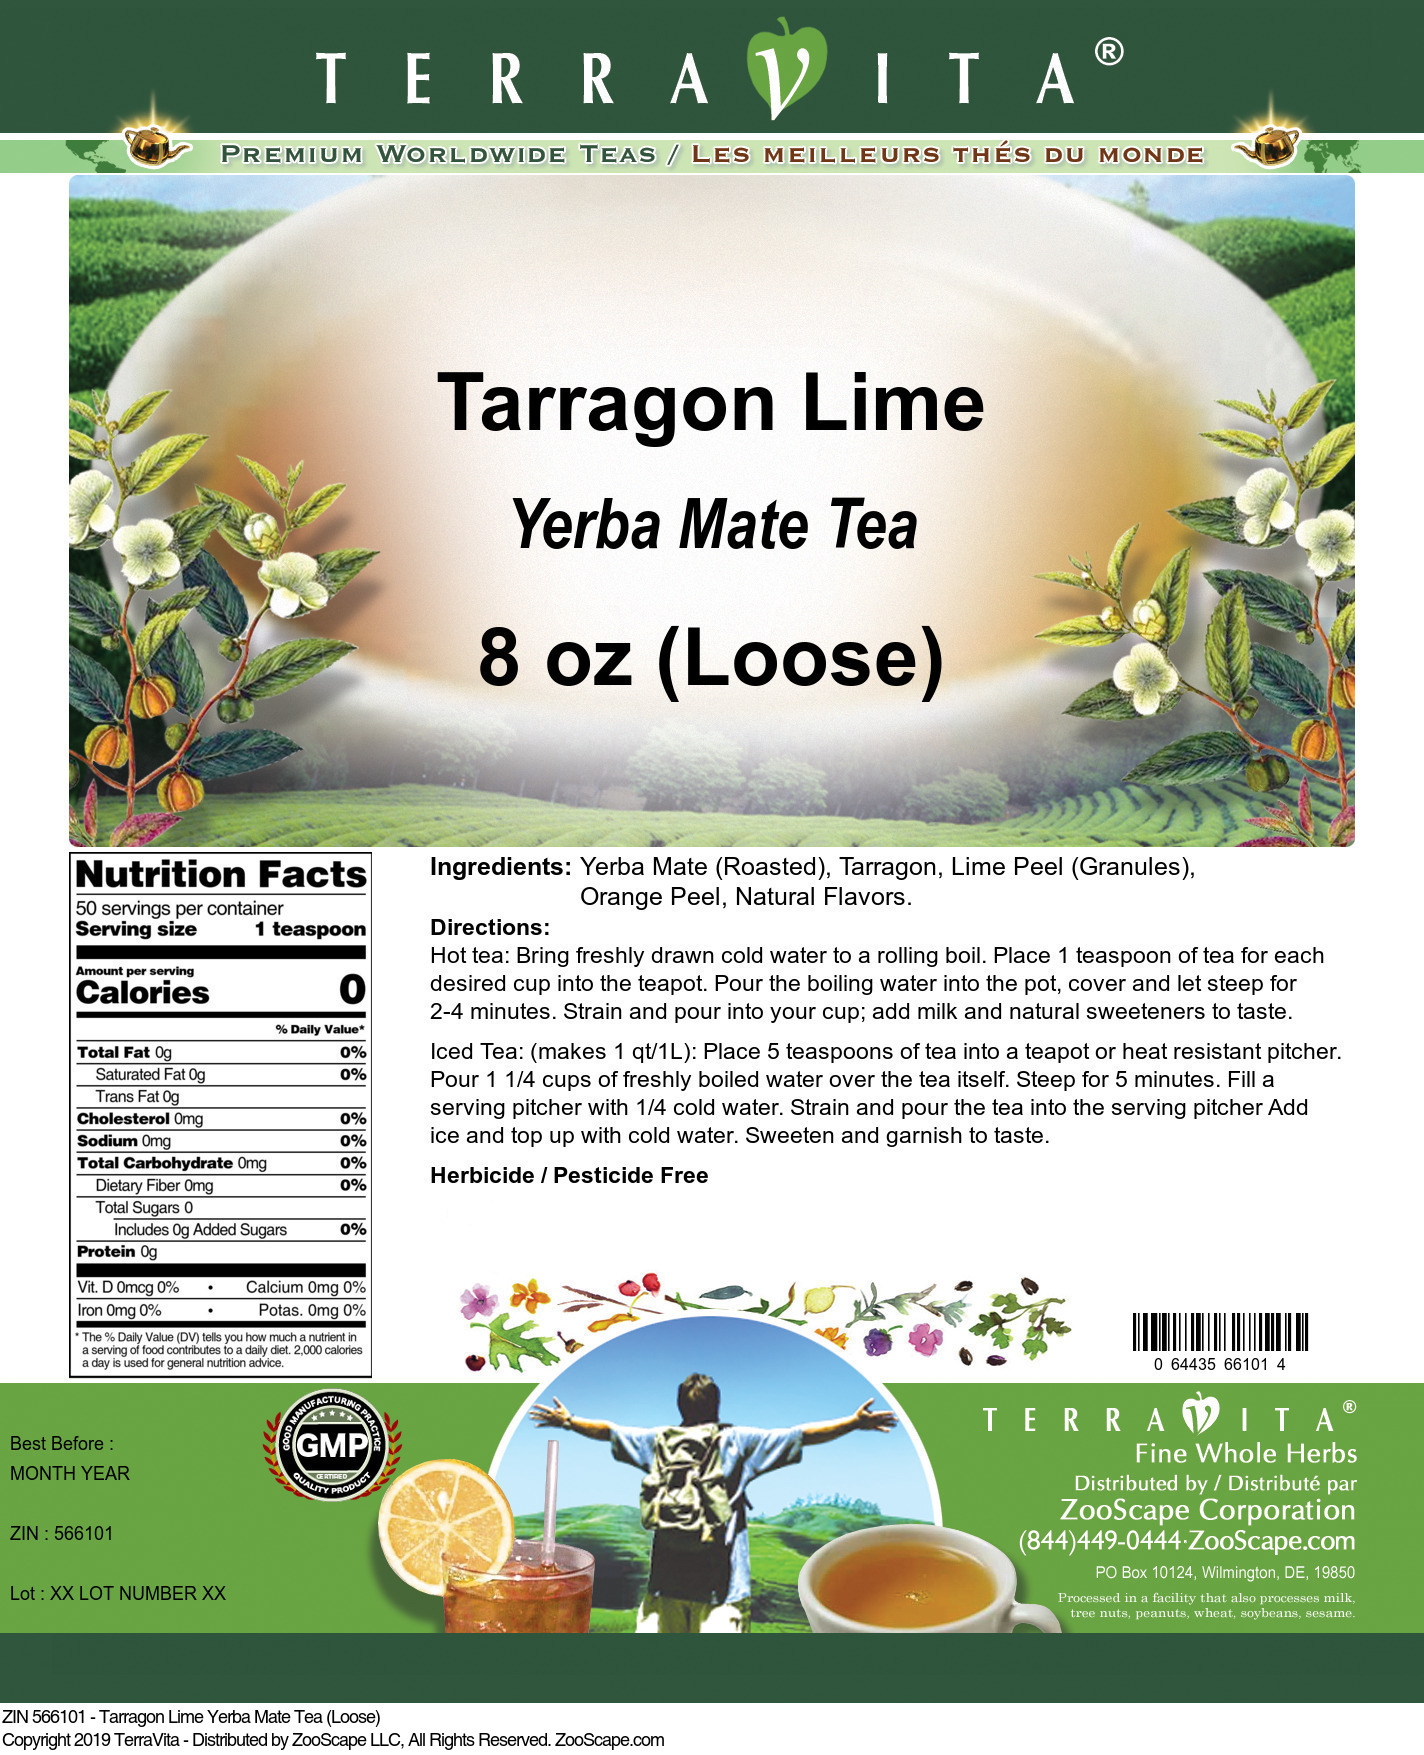 Tarragon Lime Yerba Mate Tea (Loose) - Label